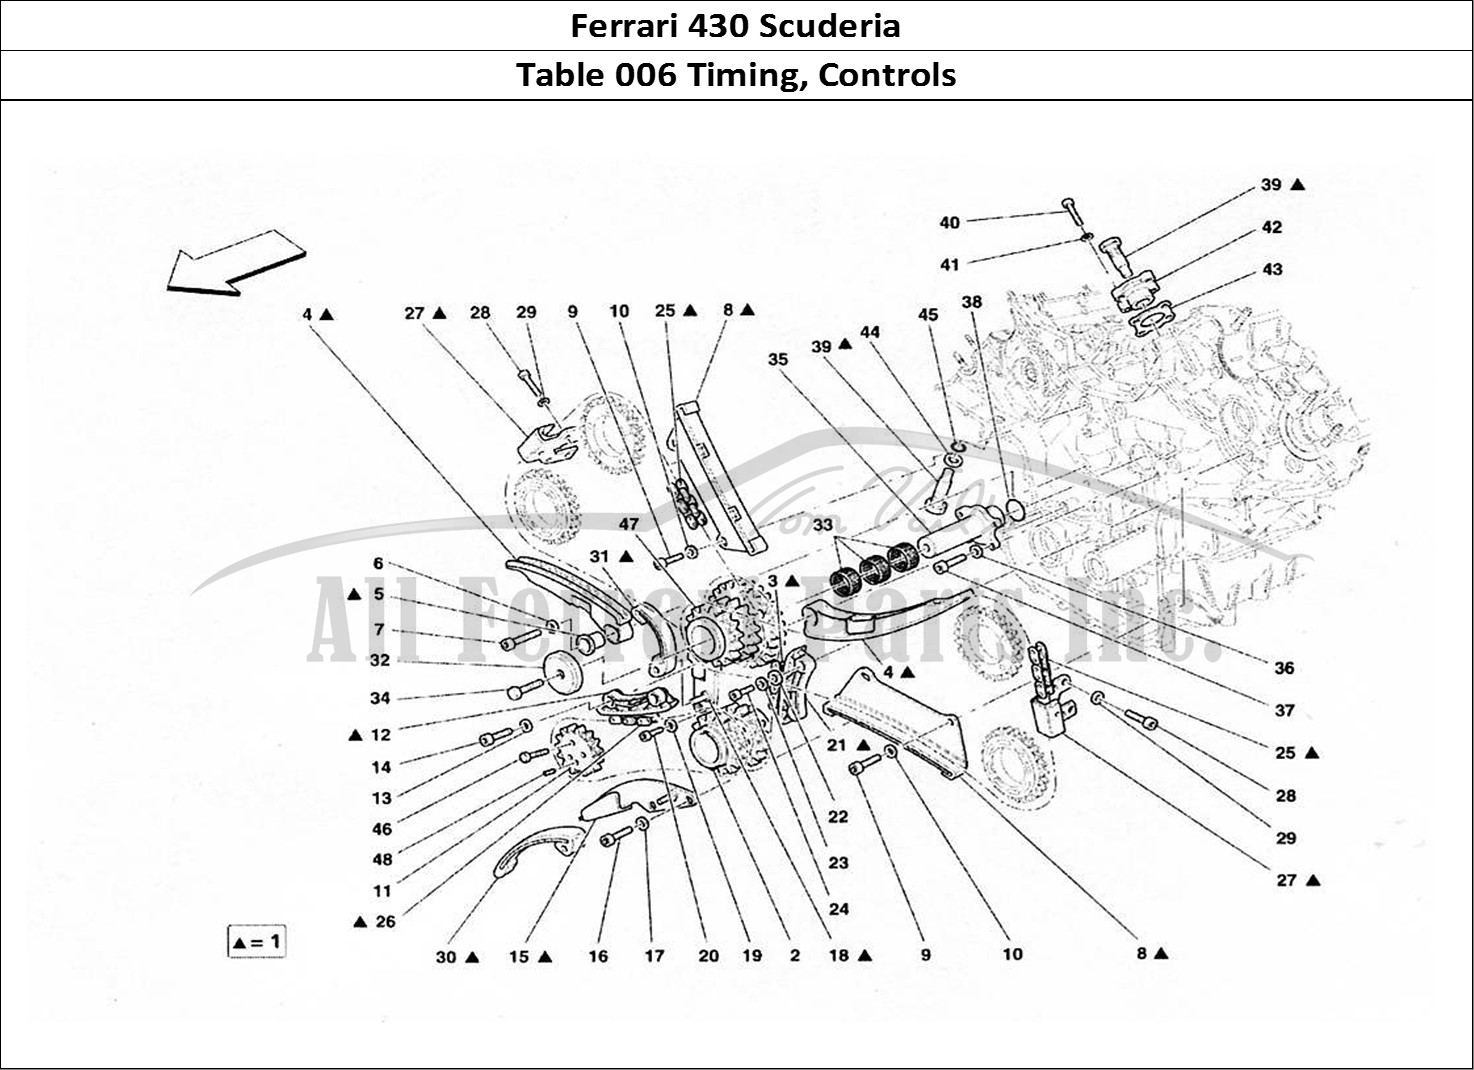 Ferrari Parts Ferrari 430 Scuderia Page 006 Timing - Controls